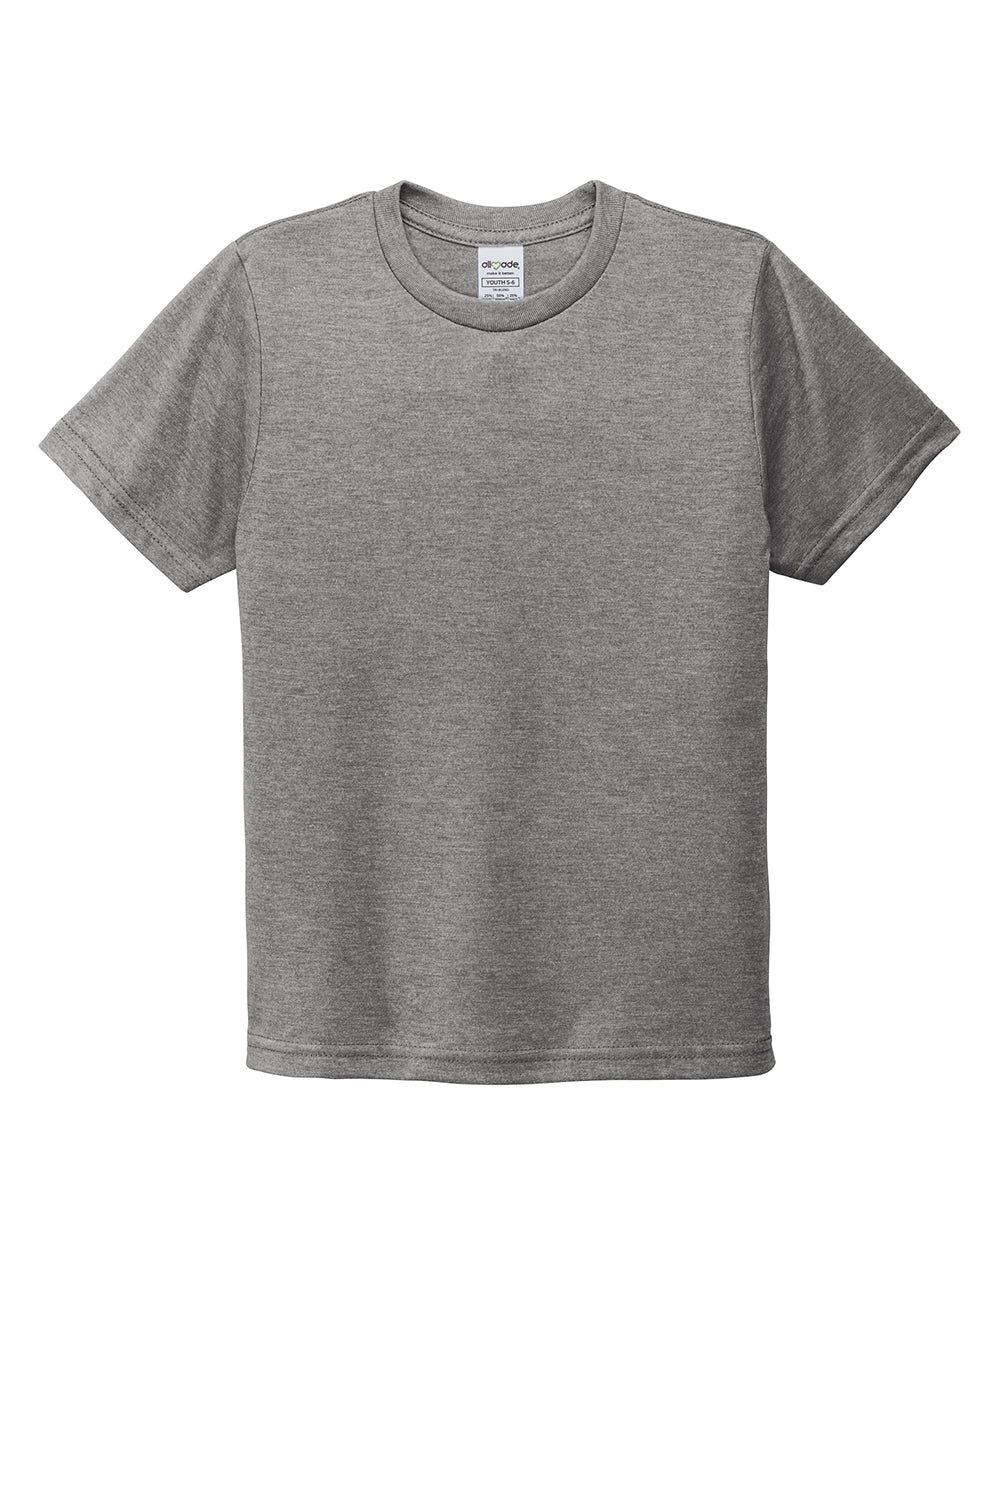 Allmade AL207 Youth Short Sleeve Crewneck T-Shirt Aluminum Grey Flat Front